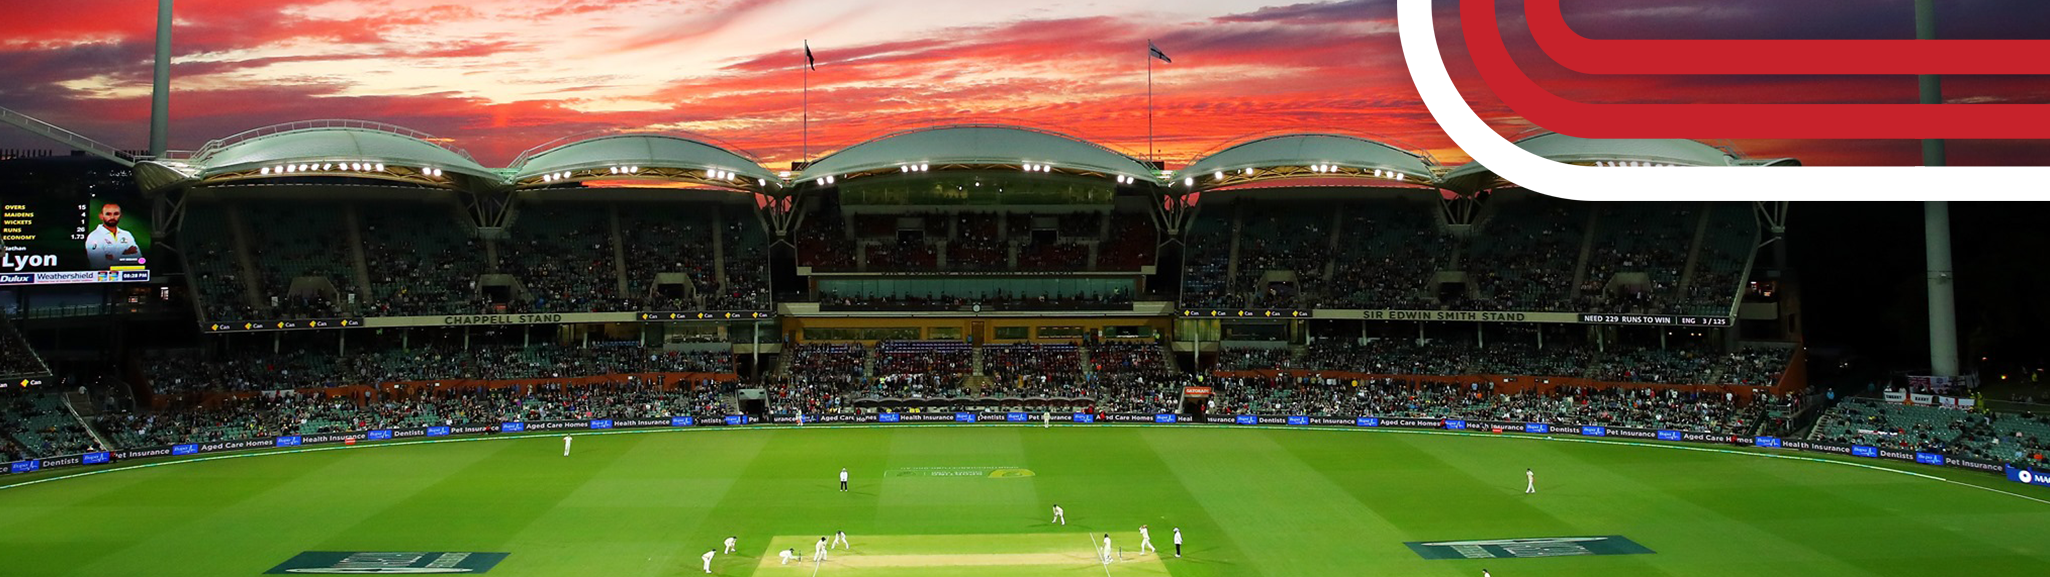 Day-Night Test: Australia v West Indies